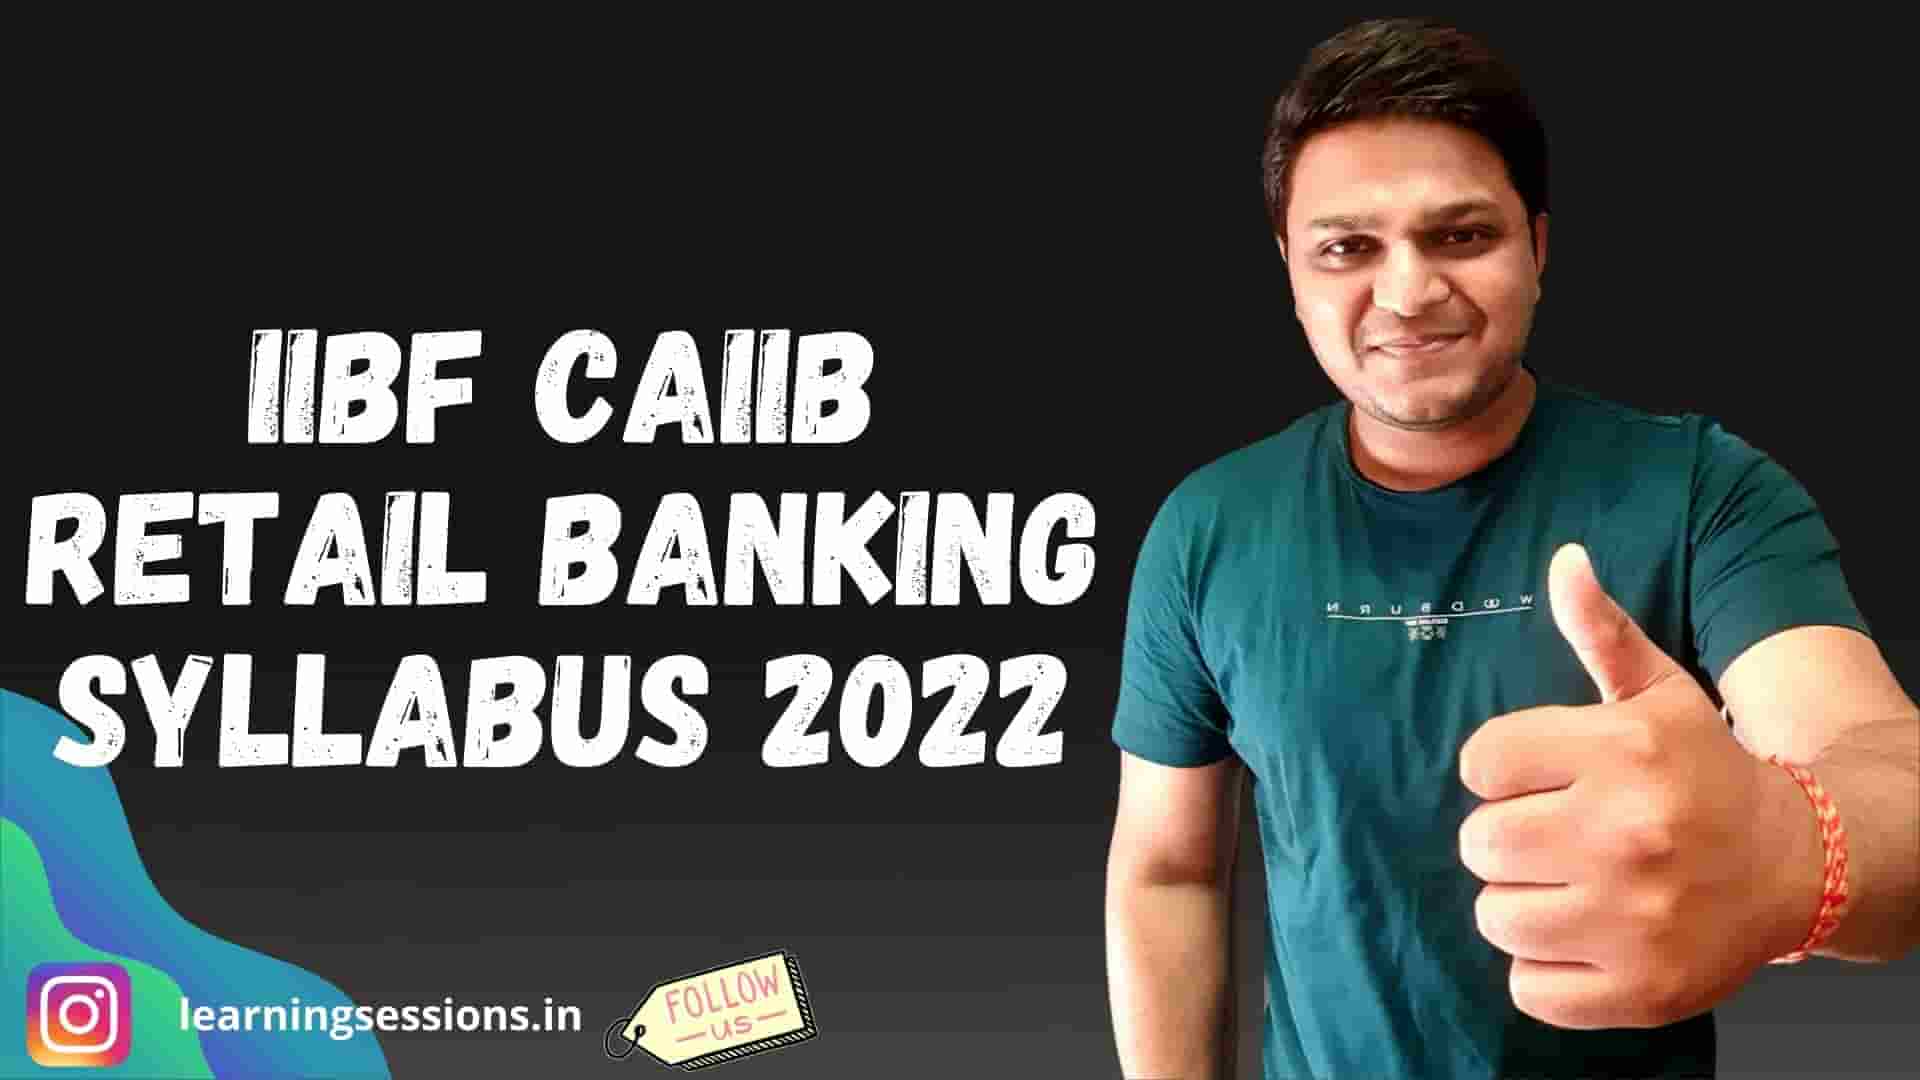 IIBF CAIIB RETAIL BANKING SYLLABUS 2022